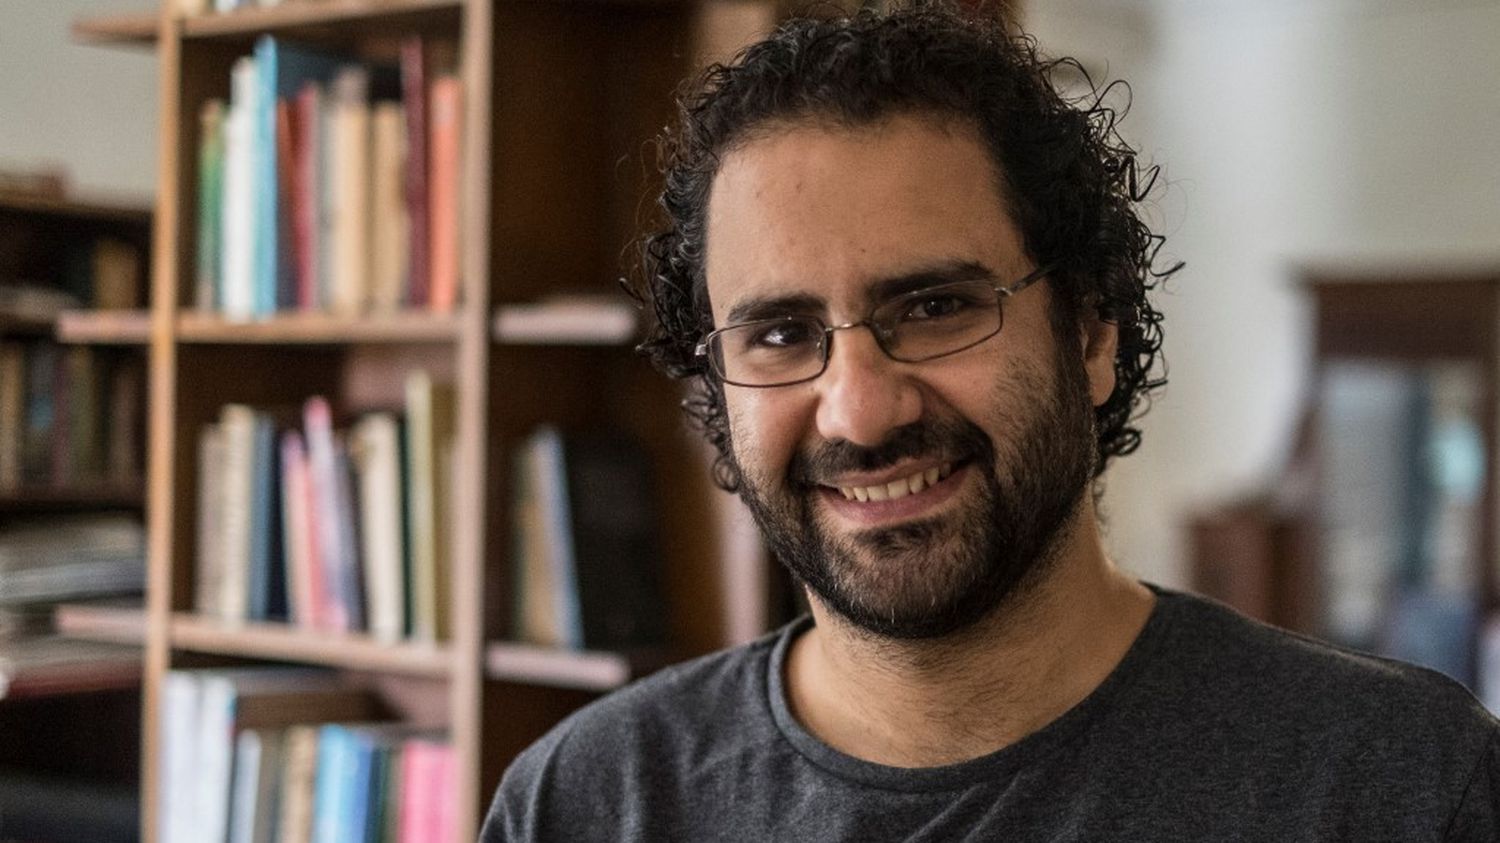 Egypt: Egyptian-British political detainee Alaa Abdel Fattah "under medical treatment"
